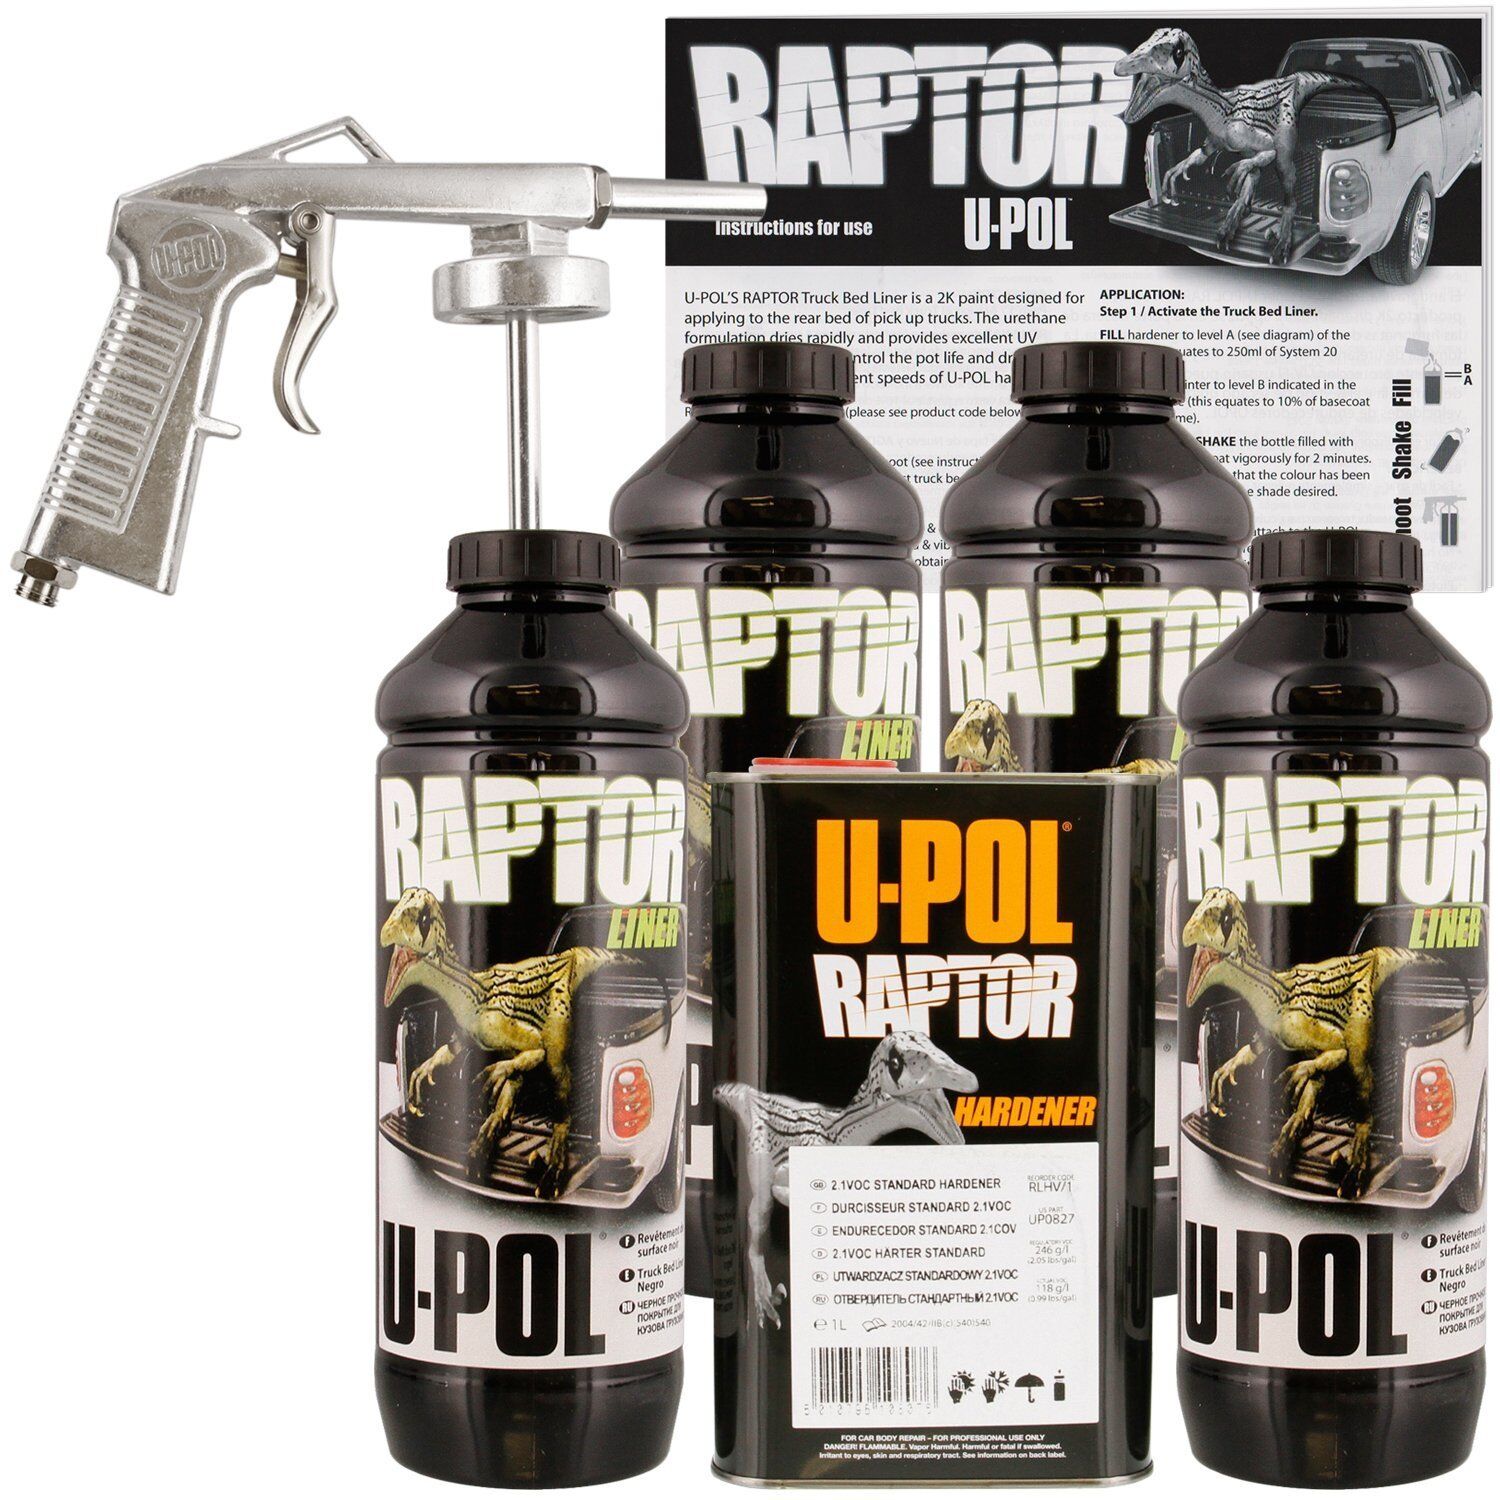 U-POL Raptor 821 Tintable Truck Bed Liner Kit w/ Spray Gun, 4L Upol